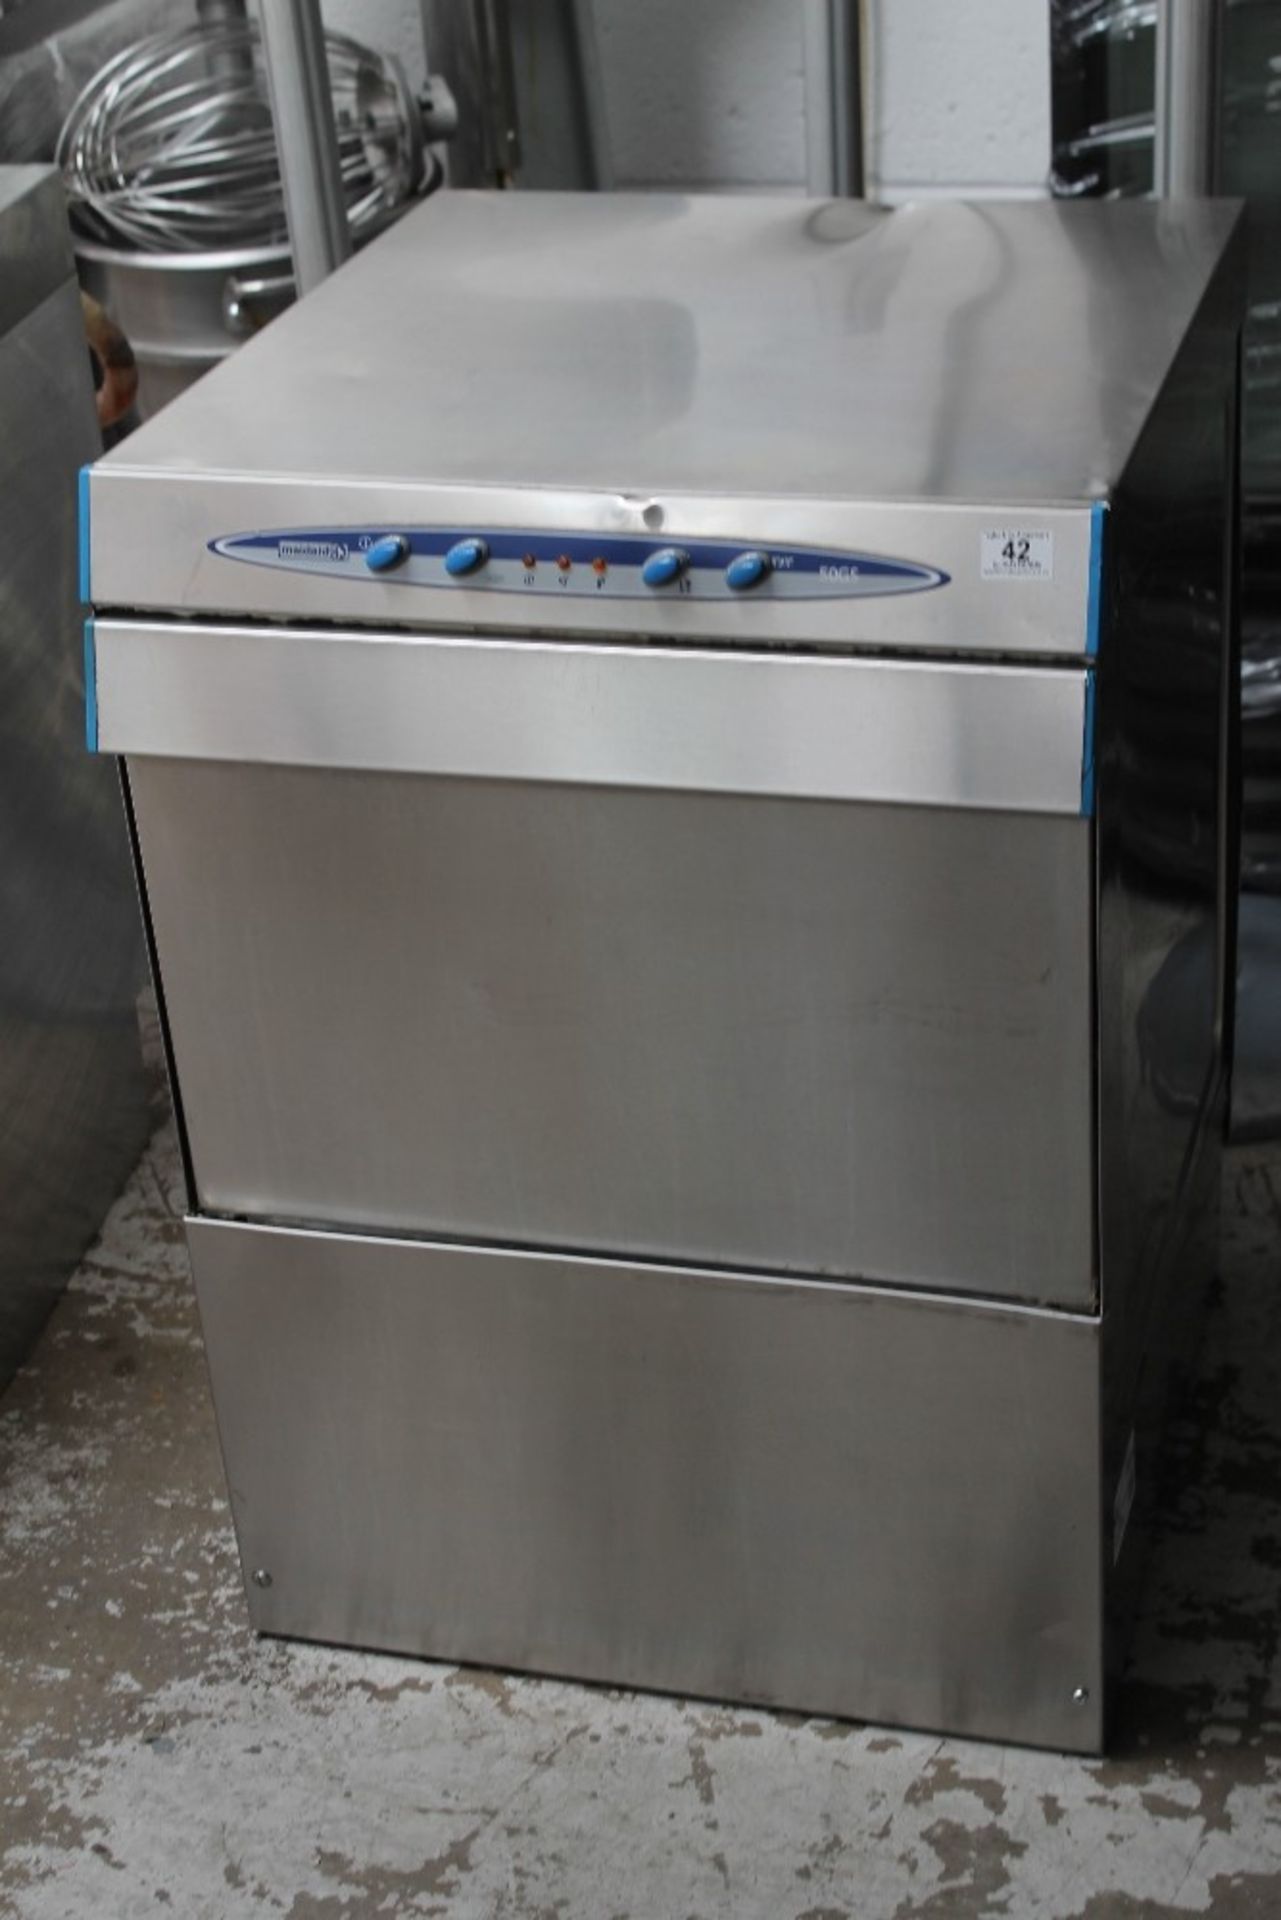 Maidaid Dishwasher – Tested – NO VAT – Model OGSDP915865 - Image 2 of 3